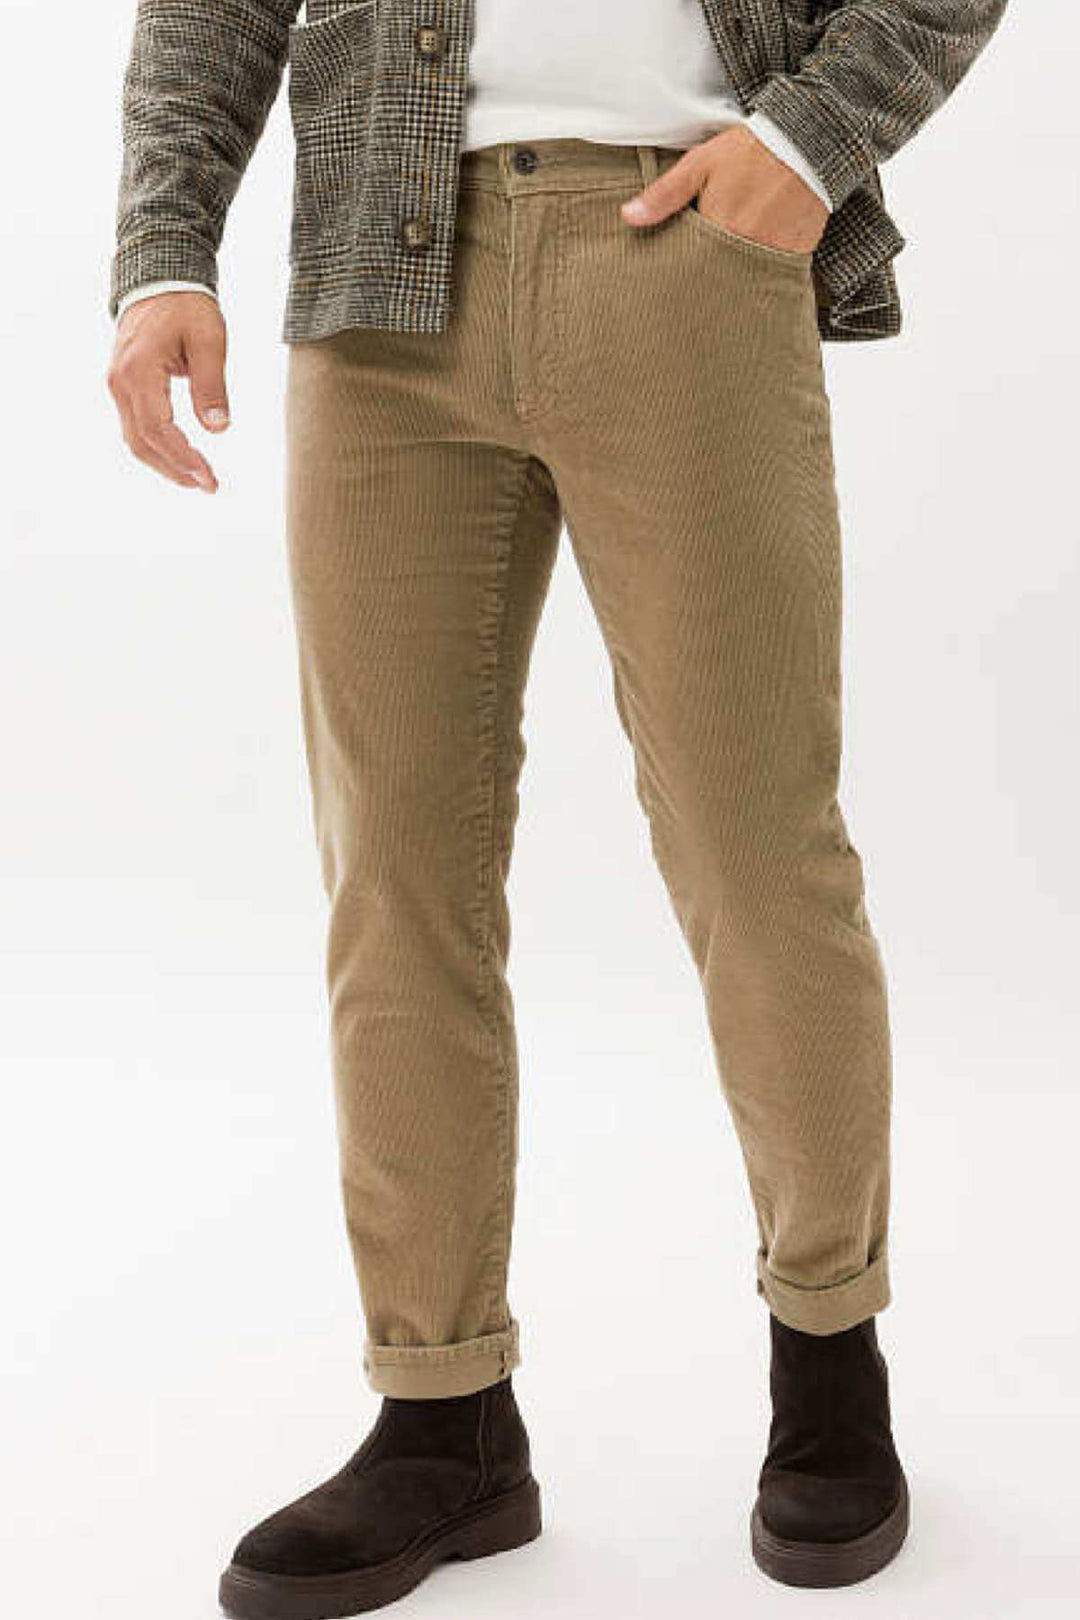 CADIZ style corduroy pants